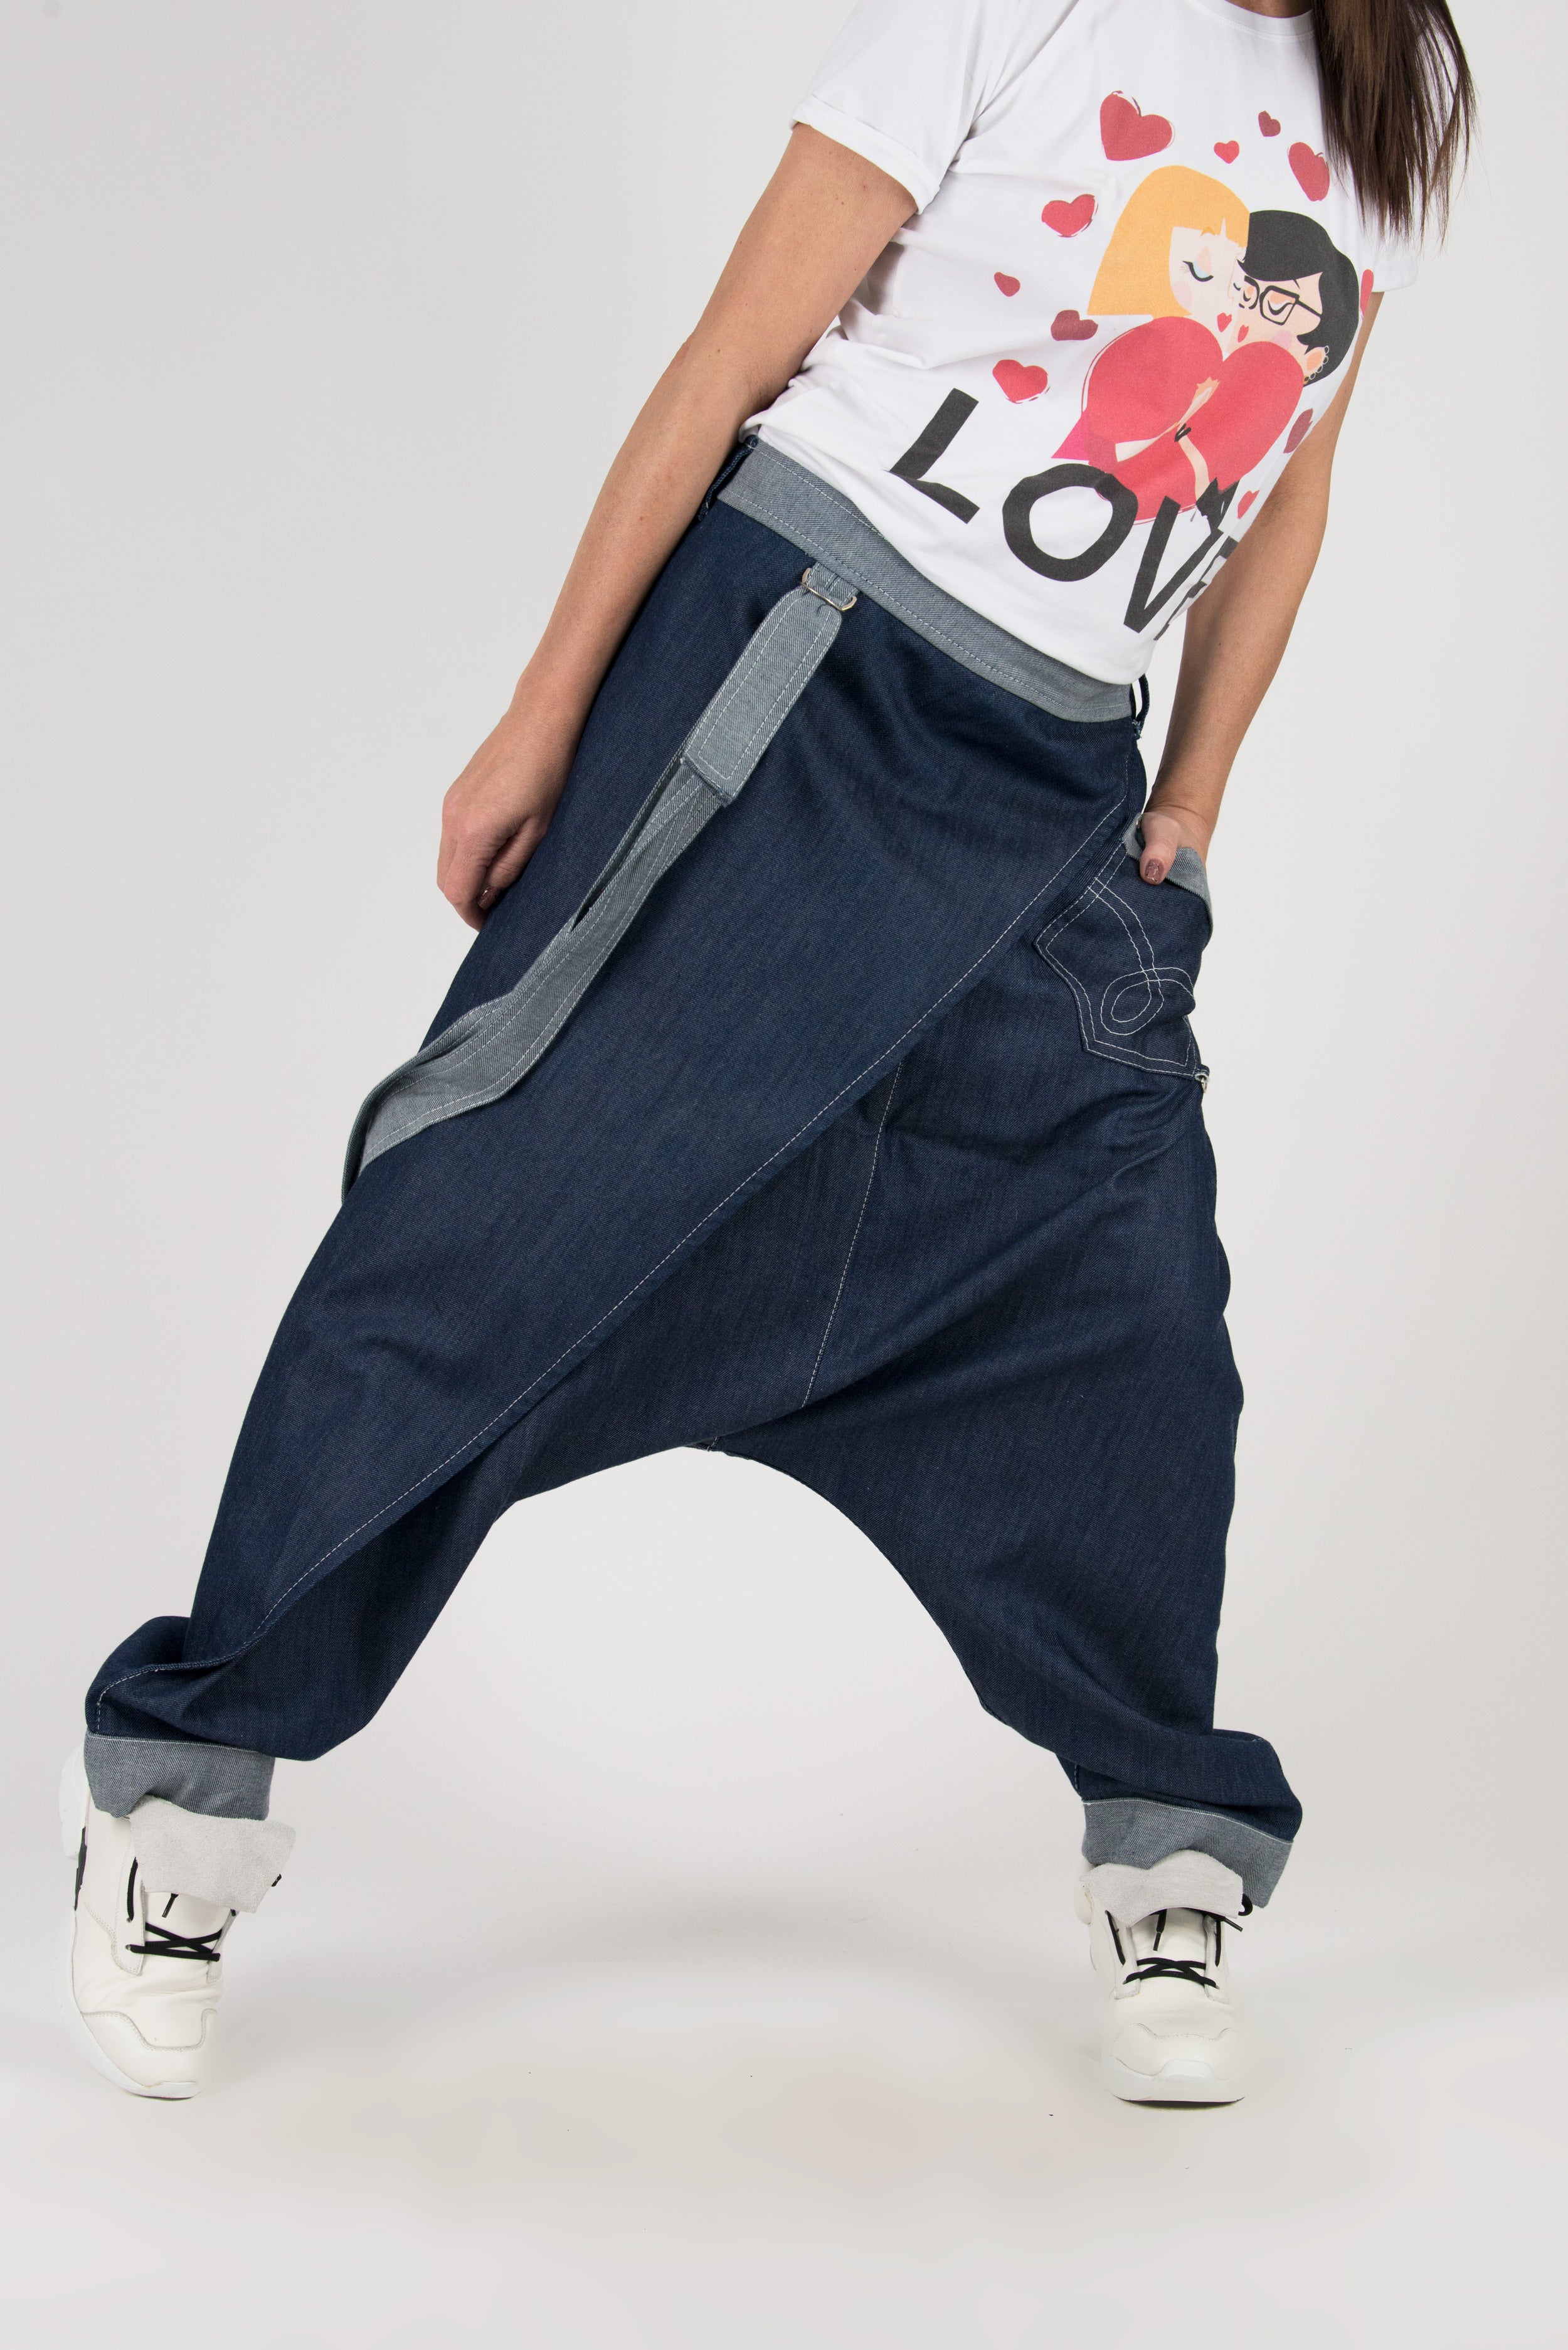 Denim Cross-Pants Women Spring High Street Style Patchwork Pockets Drop  Crotch Harem jeans Hip Hop Streetwear Bloomers Joggers - AliExpress